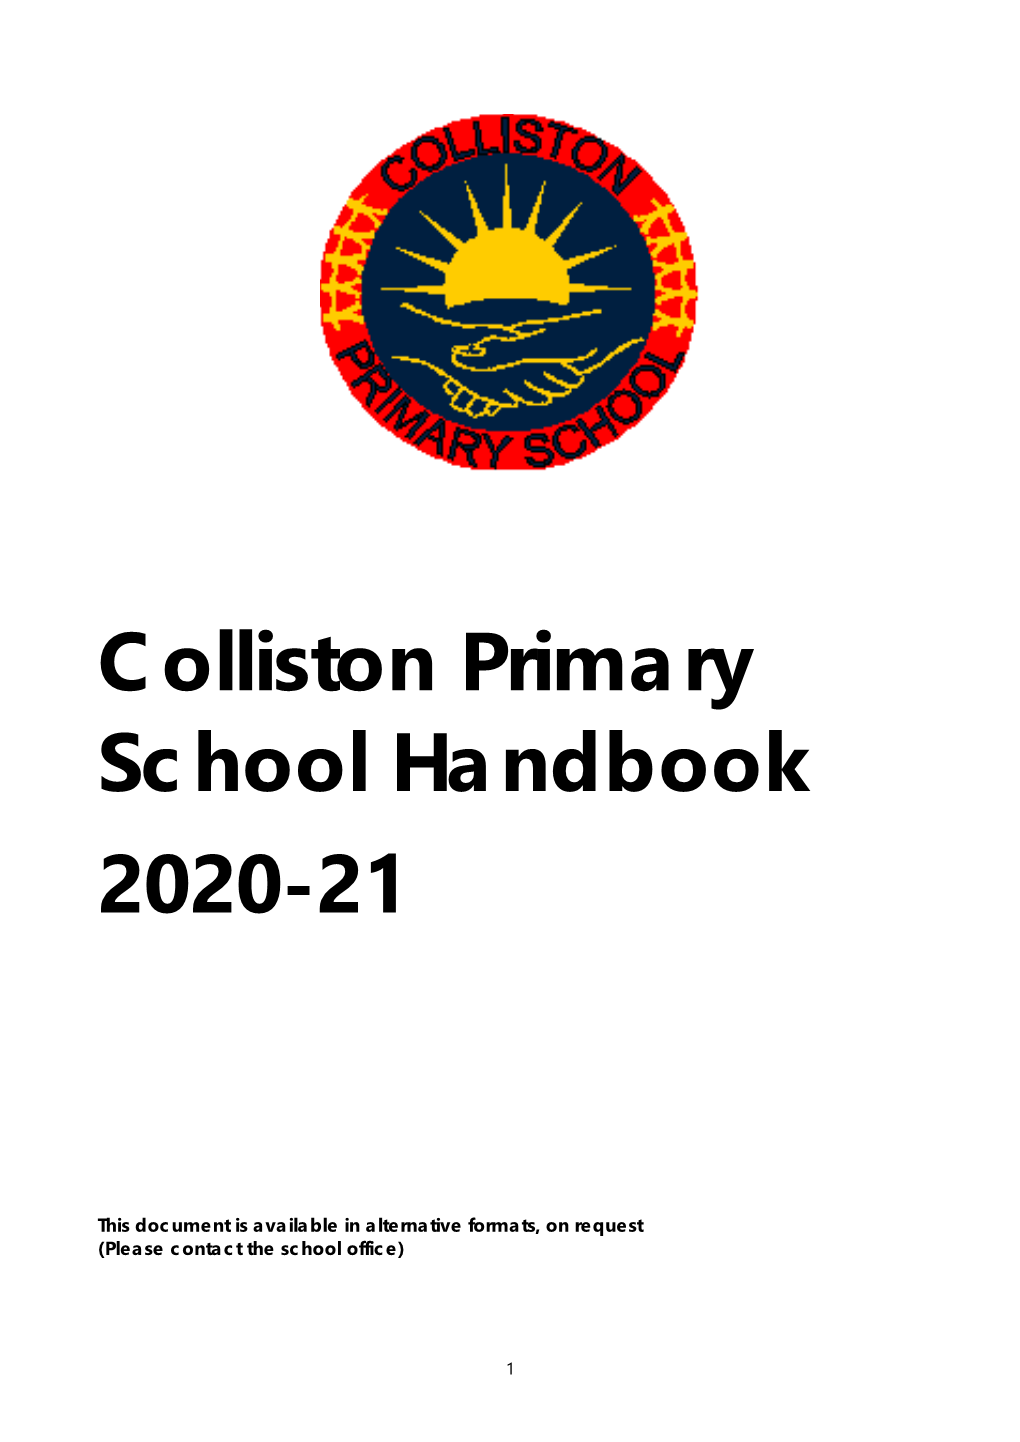 Colliston Primary School Handbook